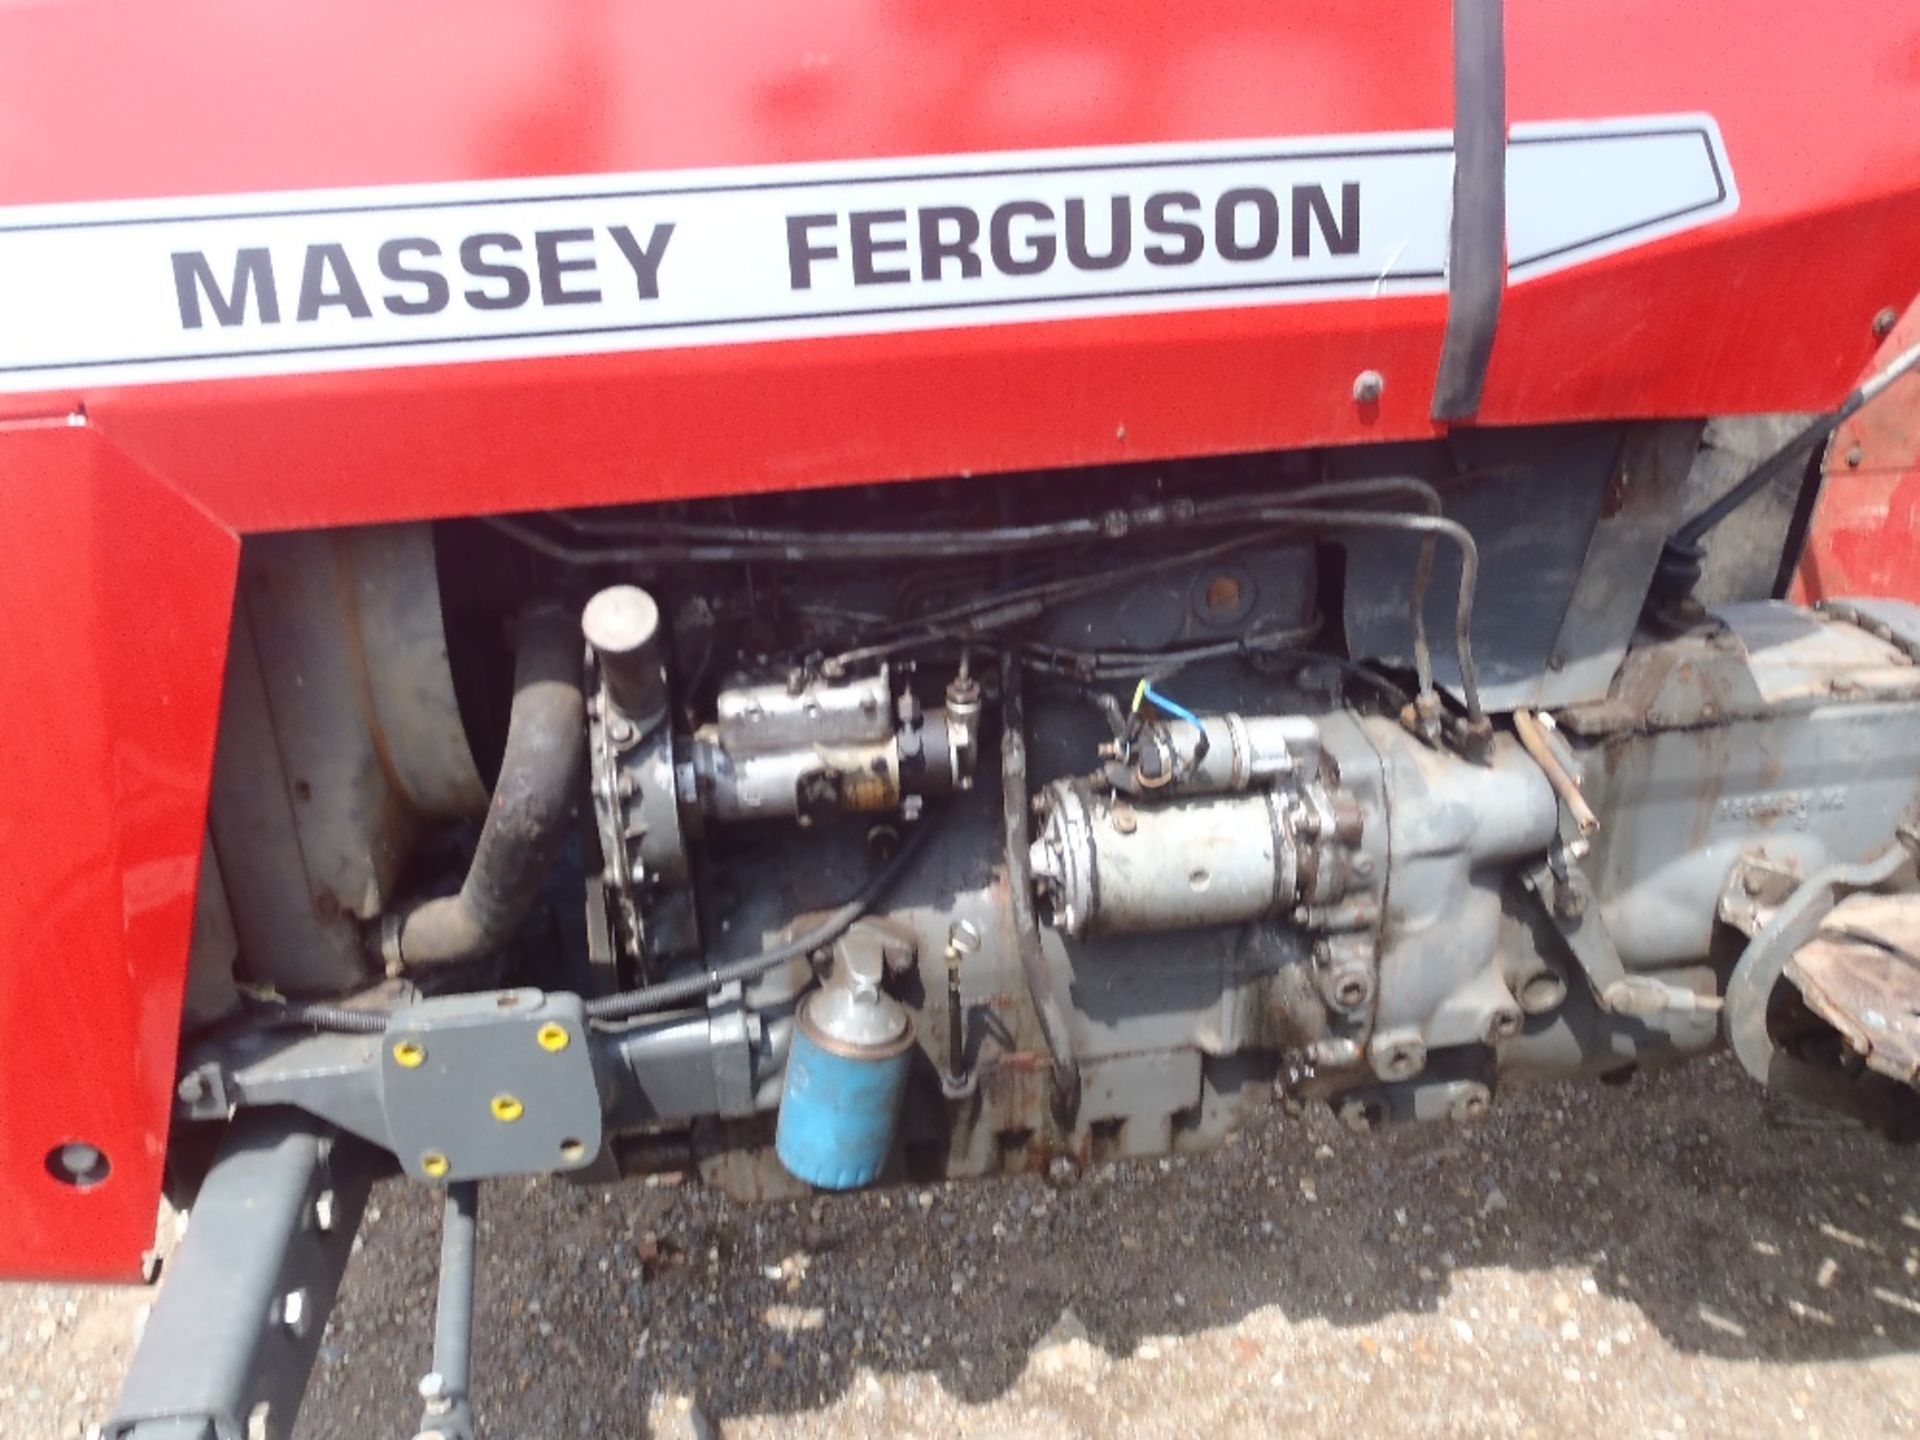 Massey Ferguson 290 8 Speed Tractor With Power Steering Ser No SL241622 - Image 6 of 8